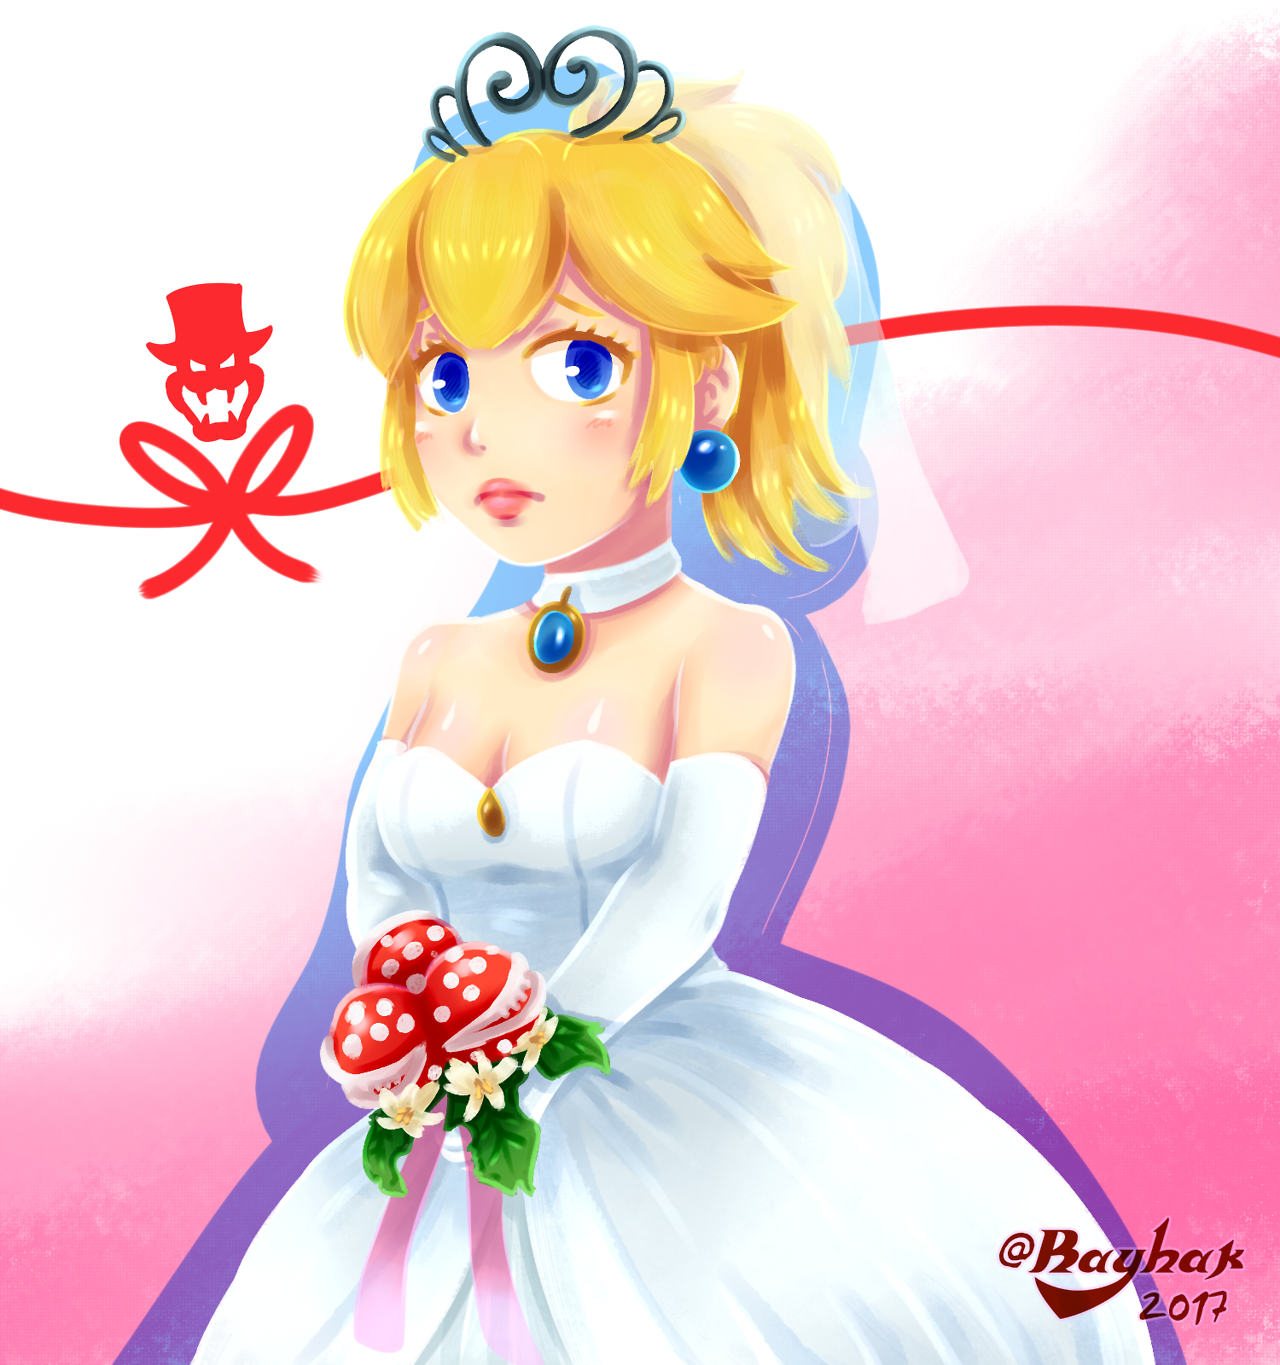 Rayhak Art — Peach In Her Wedding Dress Is Soo Cute Sadly 